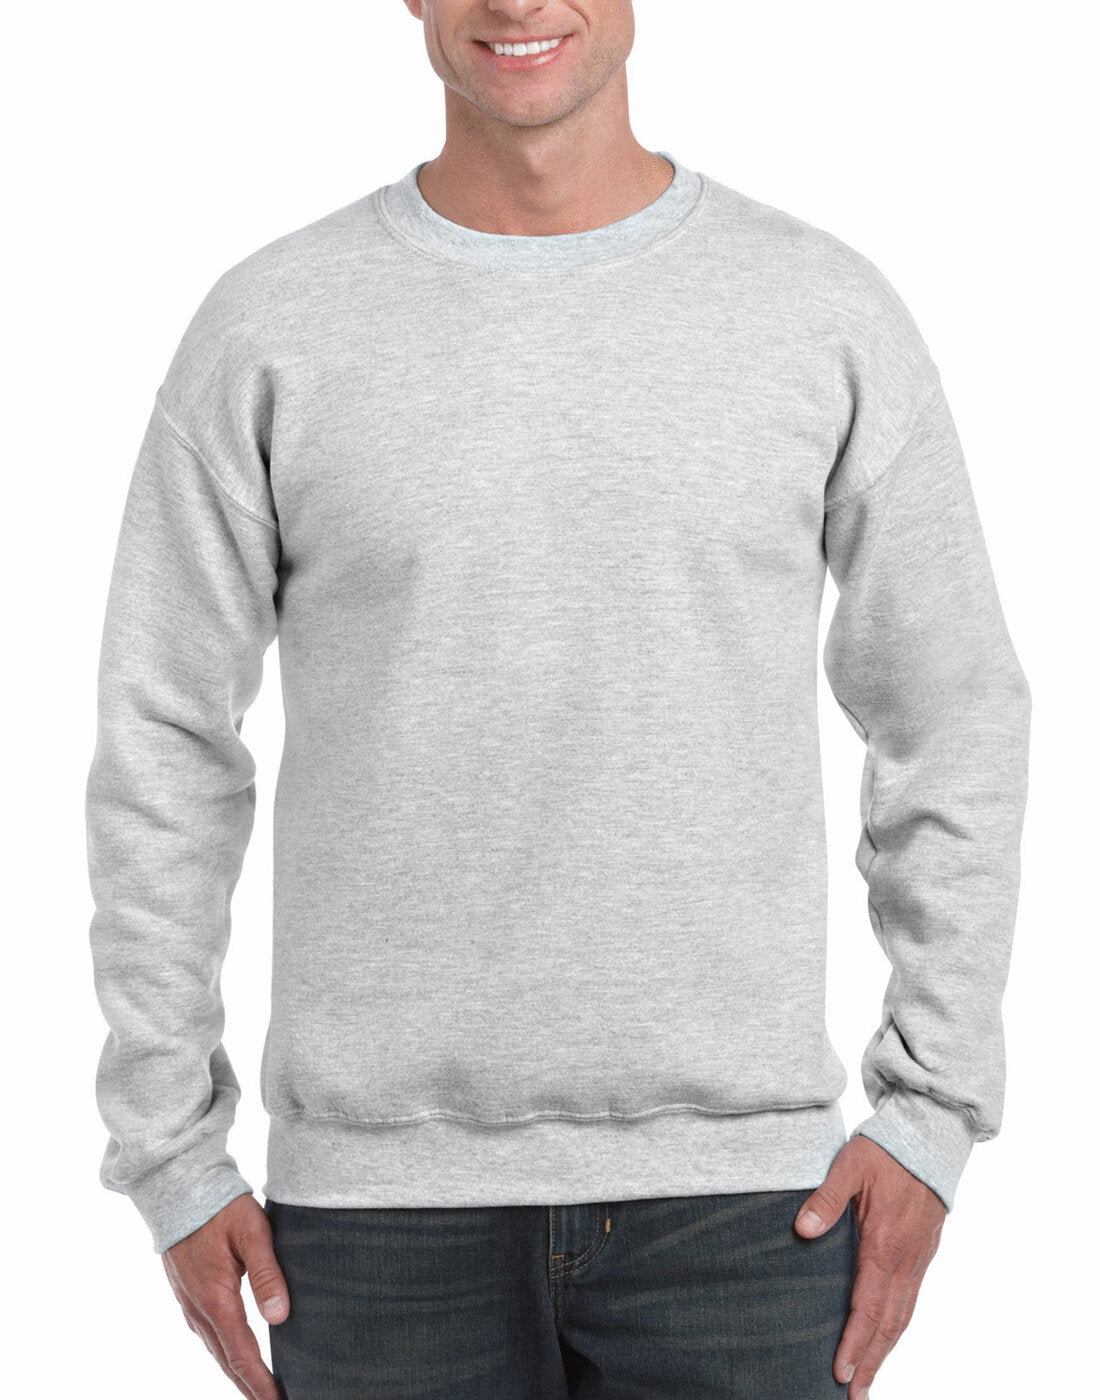 Gildan Dryblend Adult Crew Neck Sweatshirt - Ash